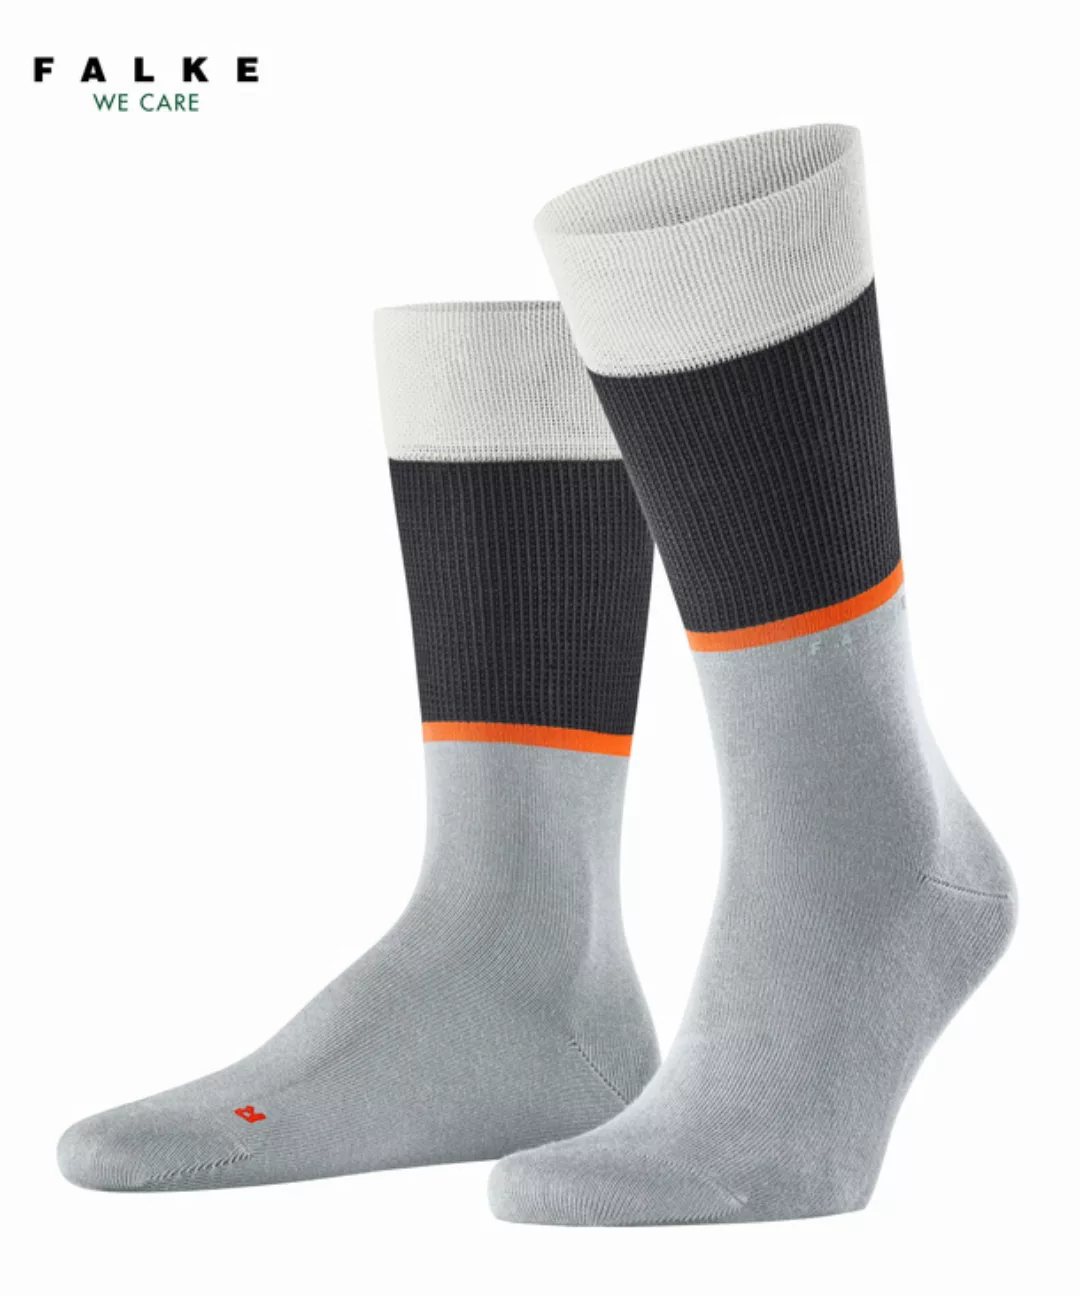 FALKE Unlimited Socken, 46-48, Grau, Mehrfarbig, Baumwolle (Bio), 12485-329 günstig online kaufen